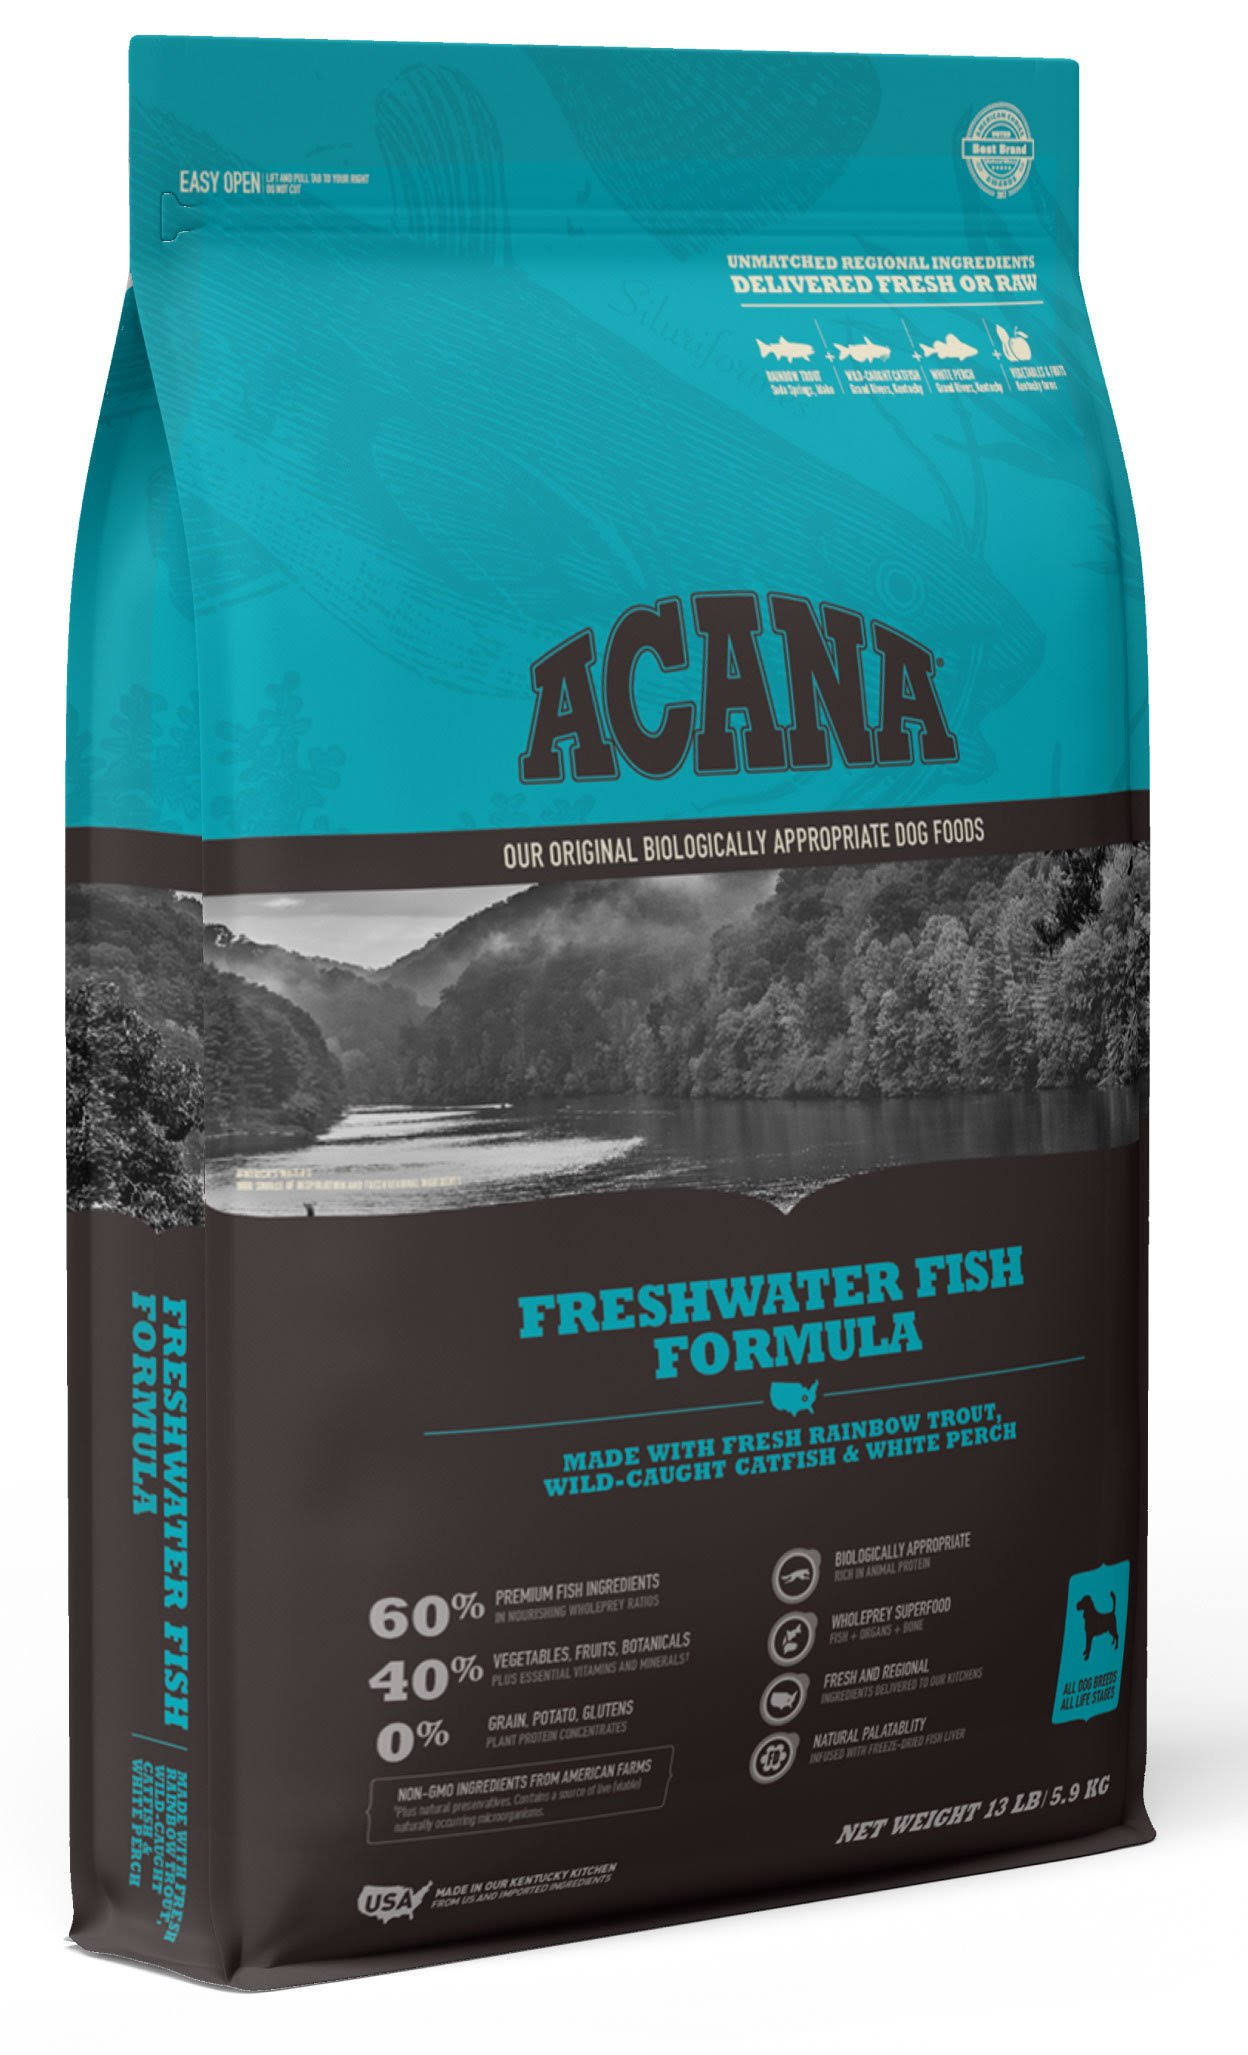 Acana Freshwater Fish Dry Dog Food 25 lbs.